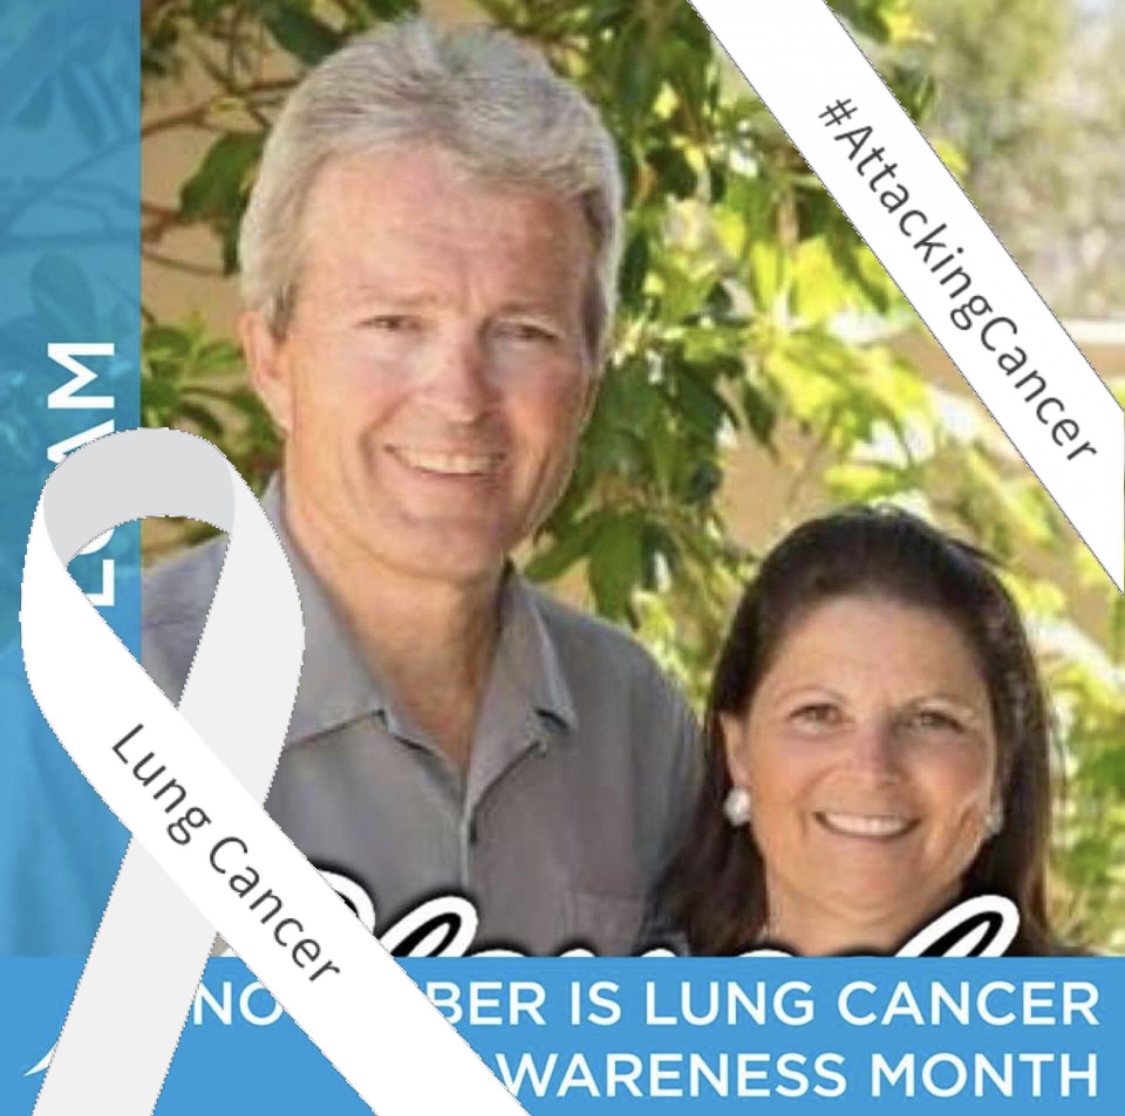 Sherm and Susan promoting lung cancer awareness